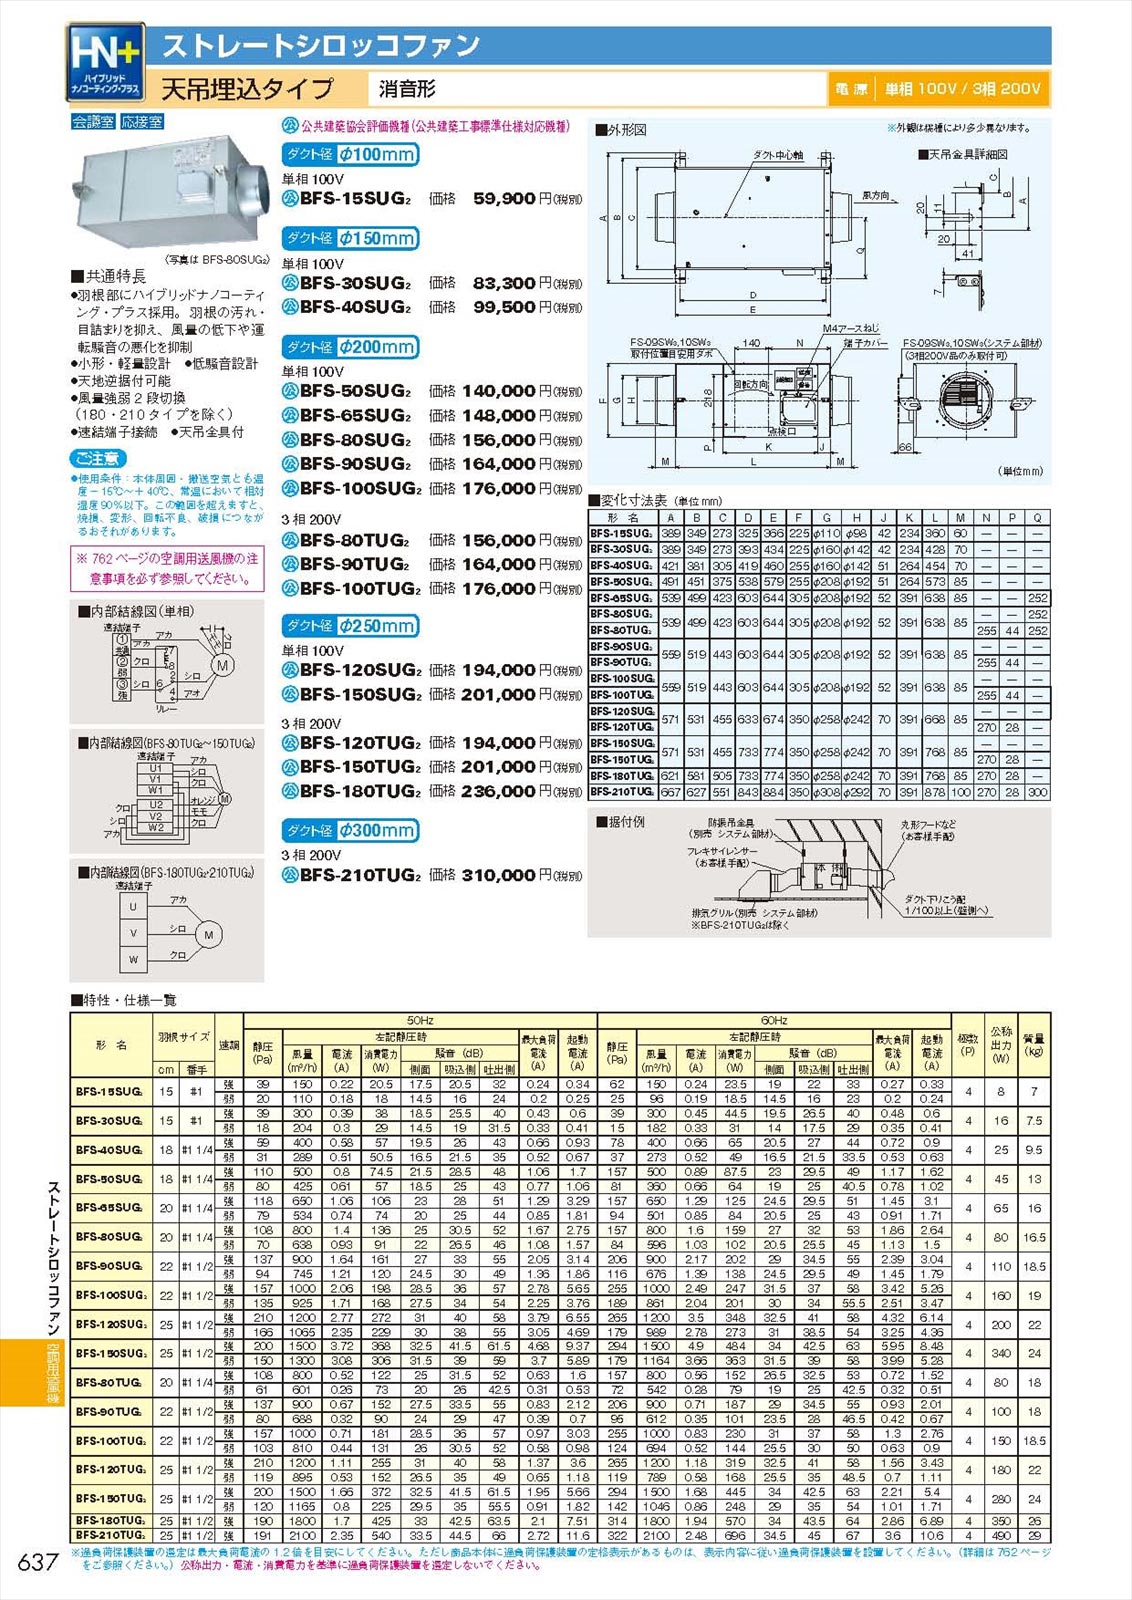 ○BFS-50WSU2 / 三菱電機 空調用送風機 ストレートシロッコファン